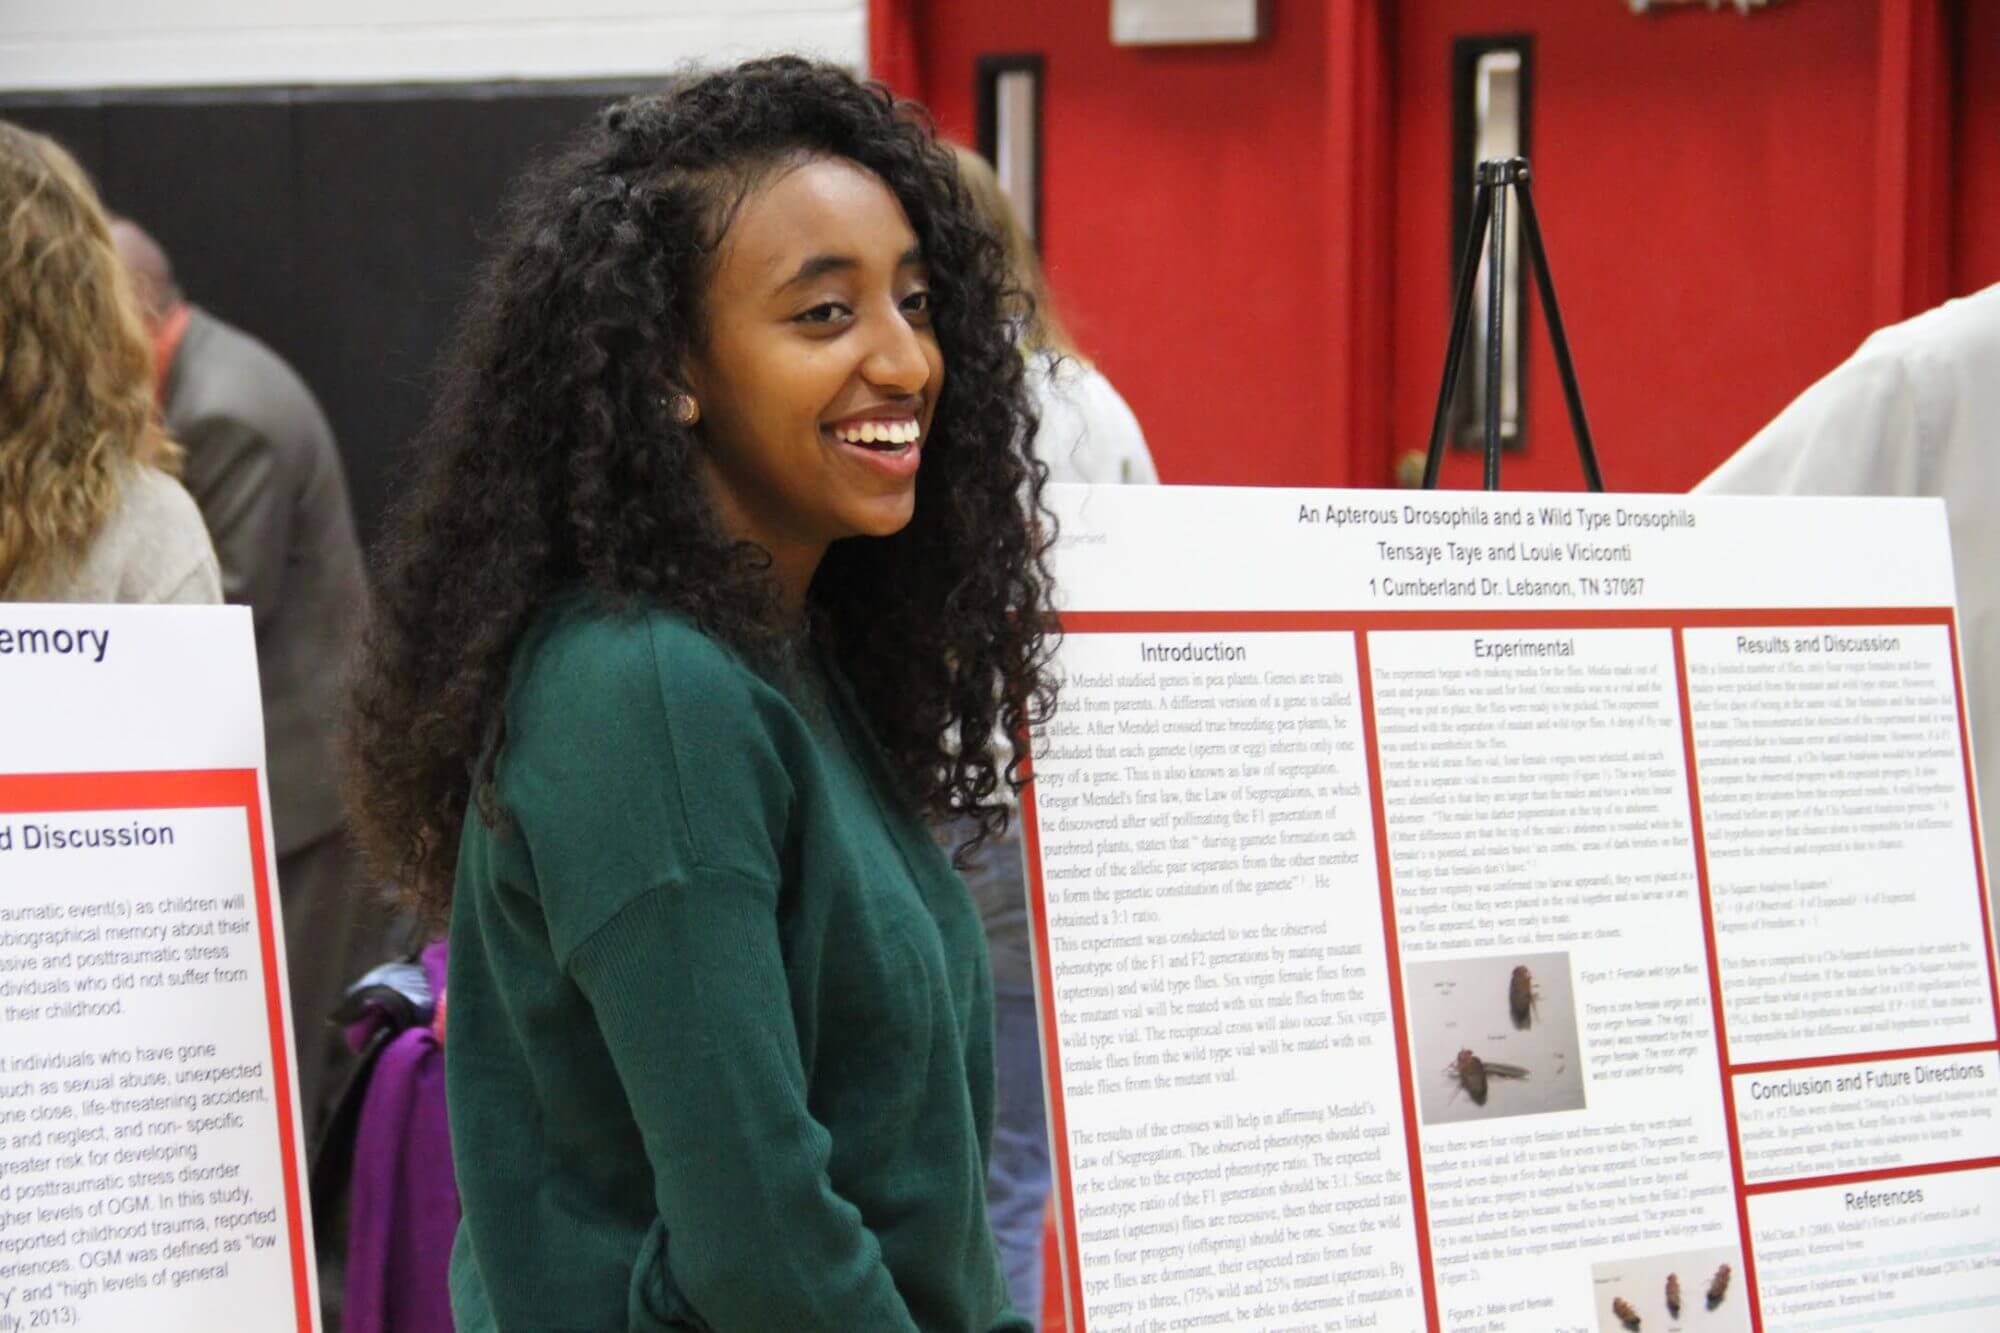 Female student presenting at Cumberland University